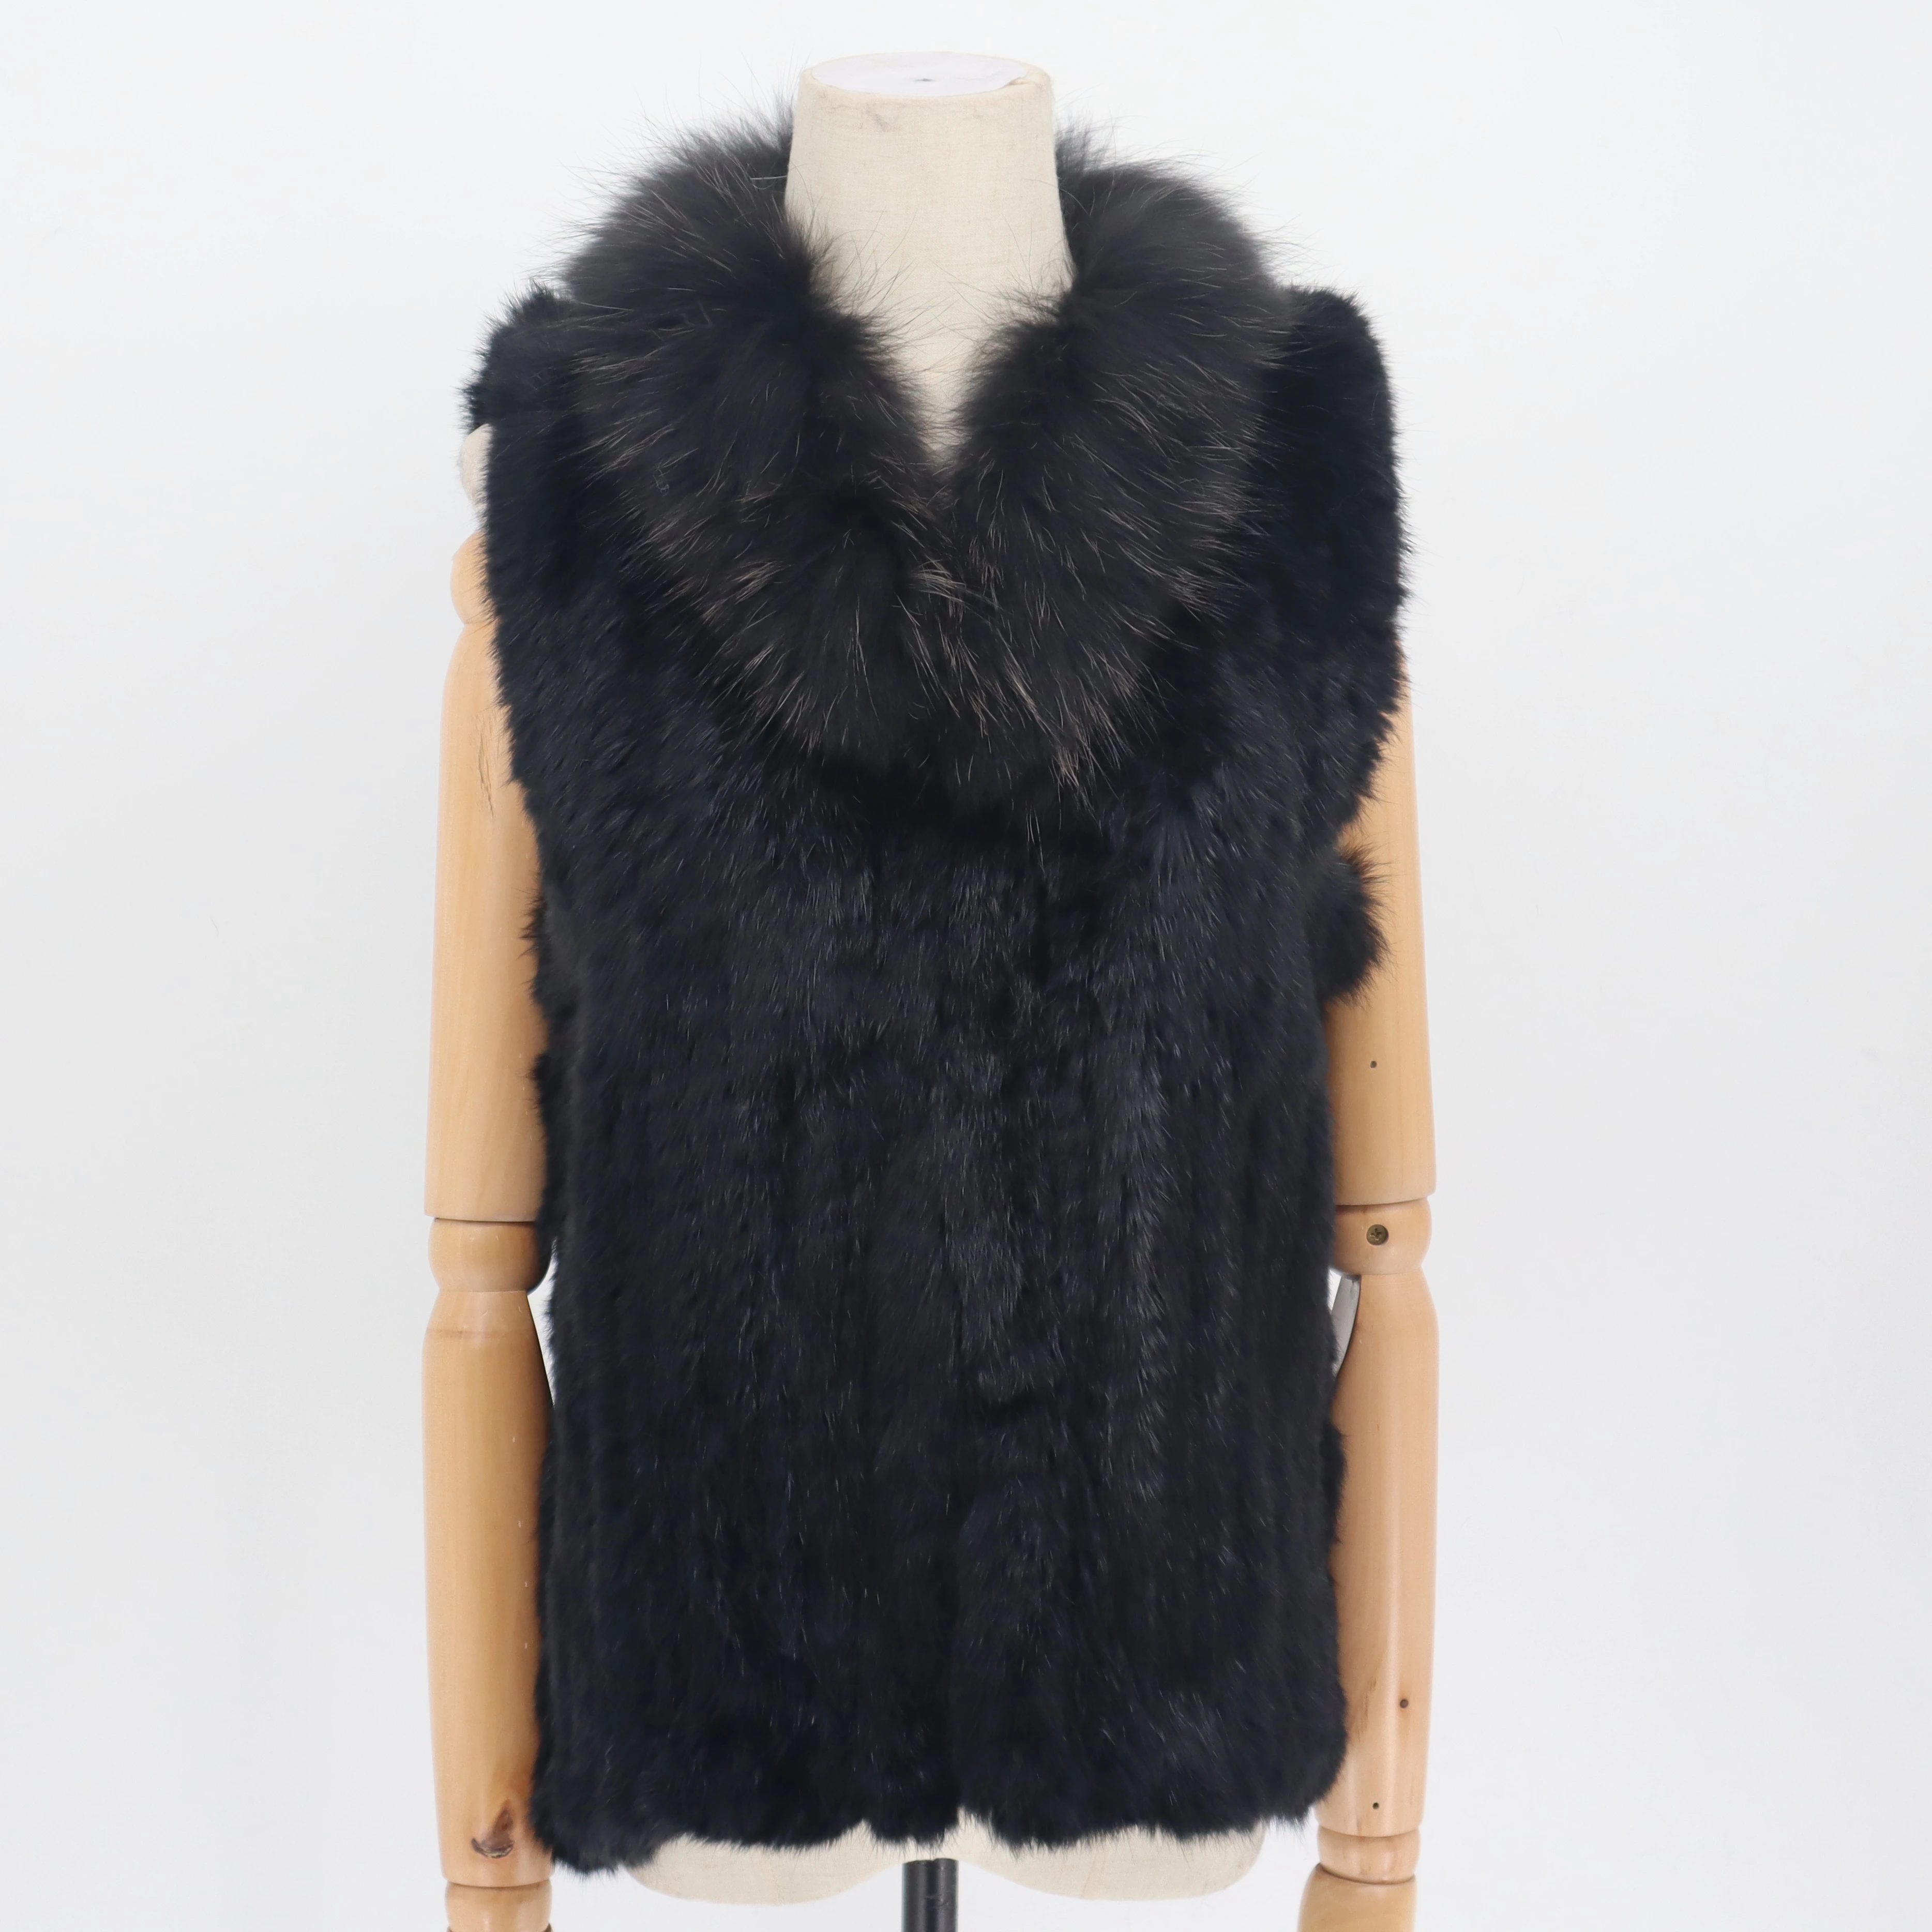 down coats & jackets 2021 Fashion Real Rabbit Fashion Fur Vest High-end Women Knitted Sleeveless Fur Vests With Natural Raccoon Fur Jacket Women Coat puffy coats